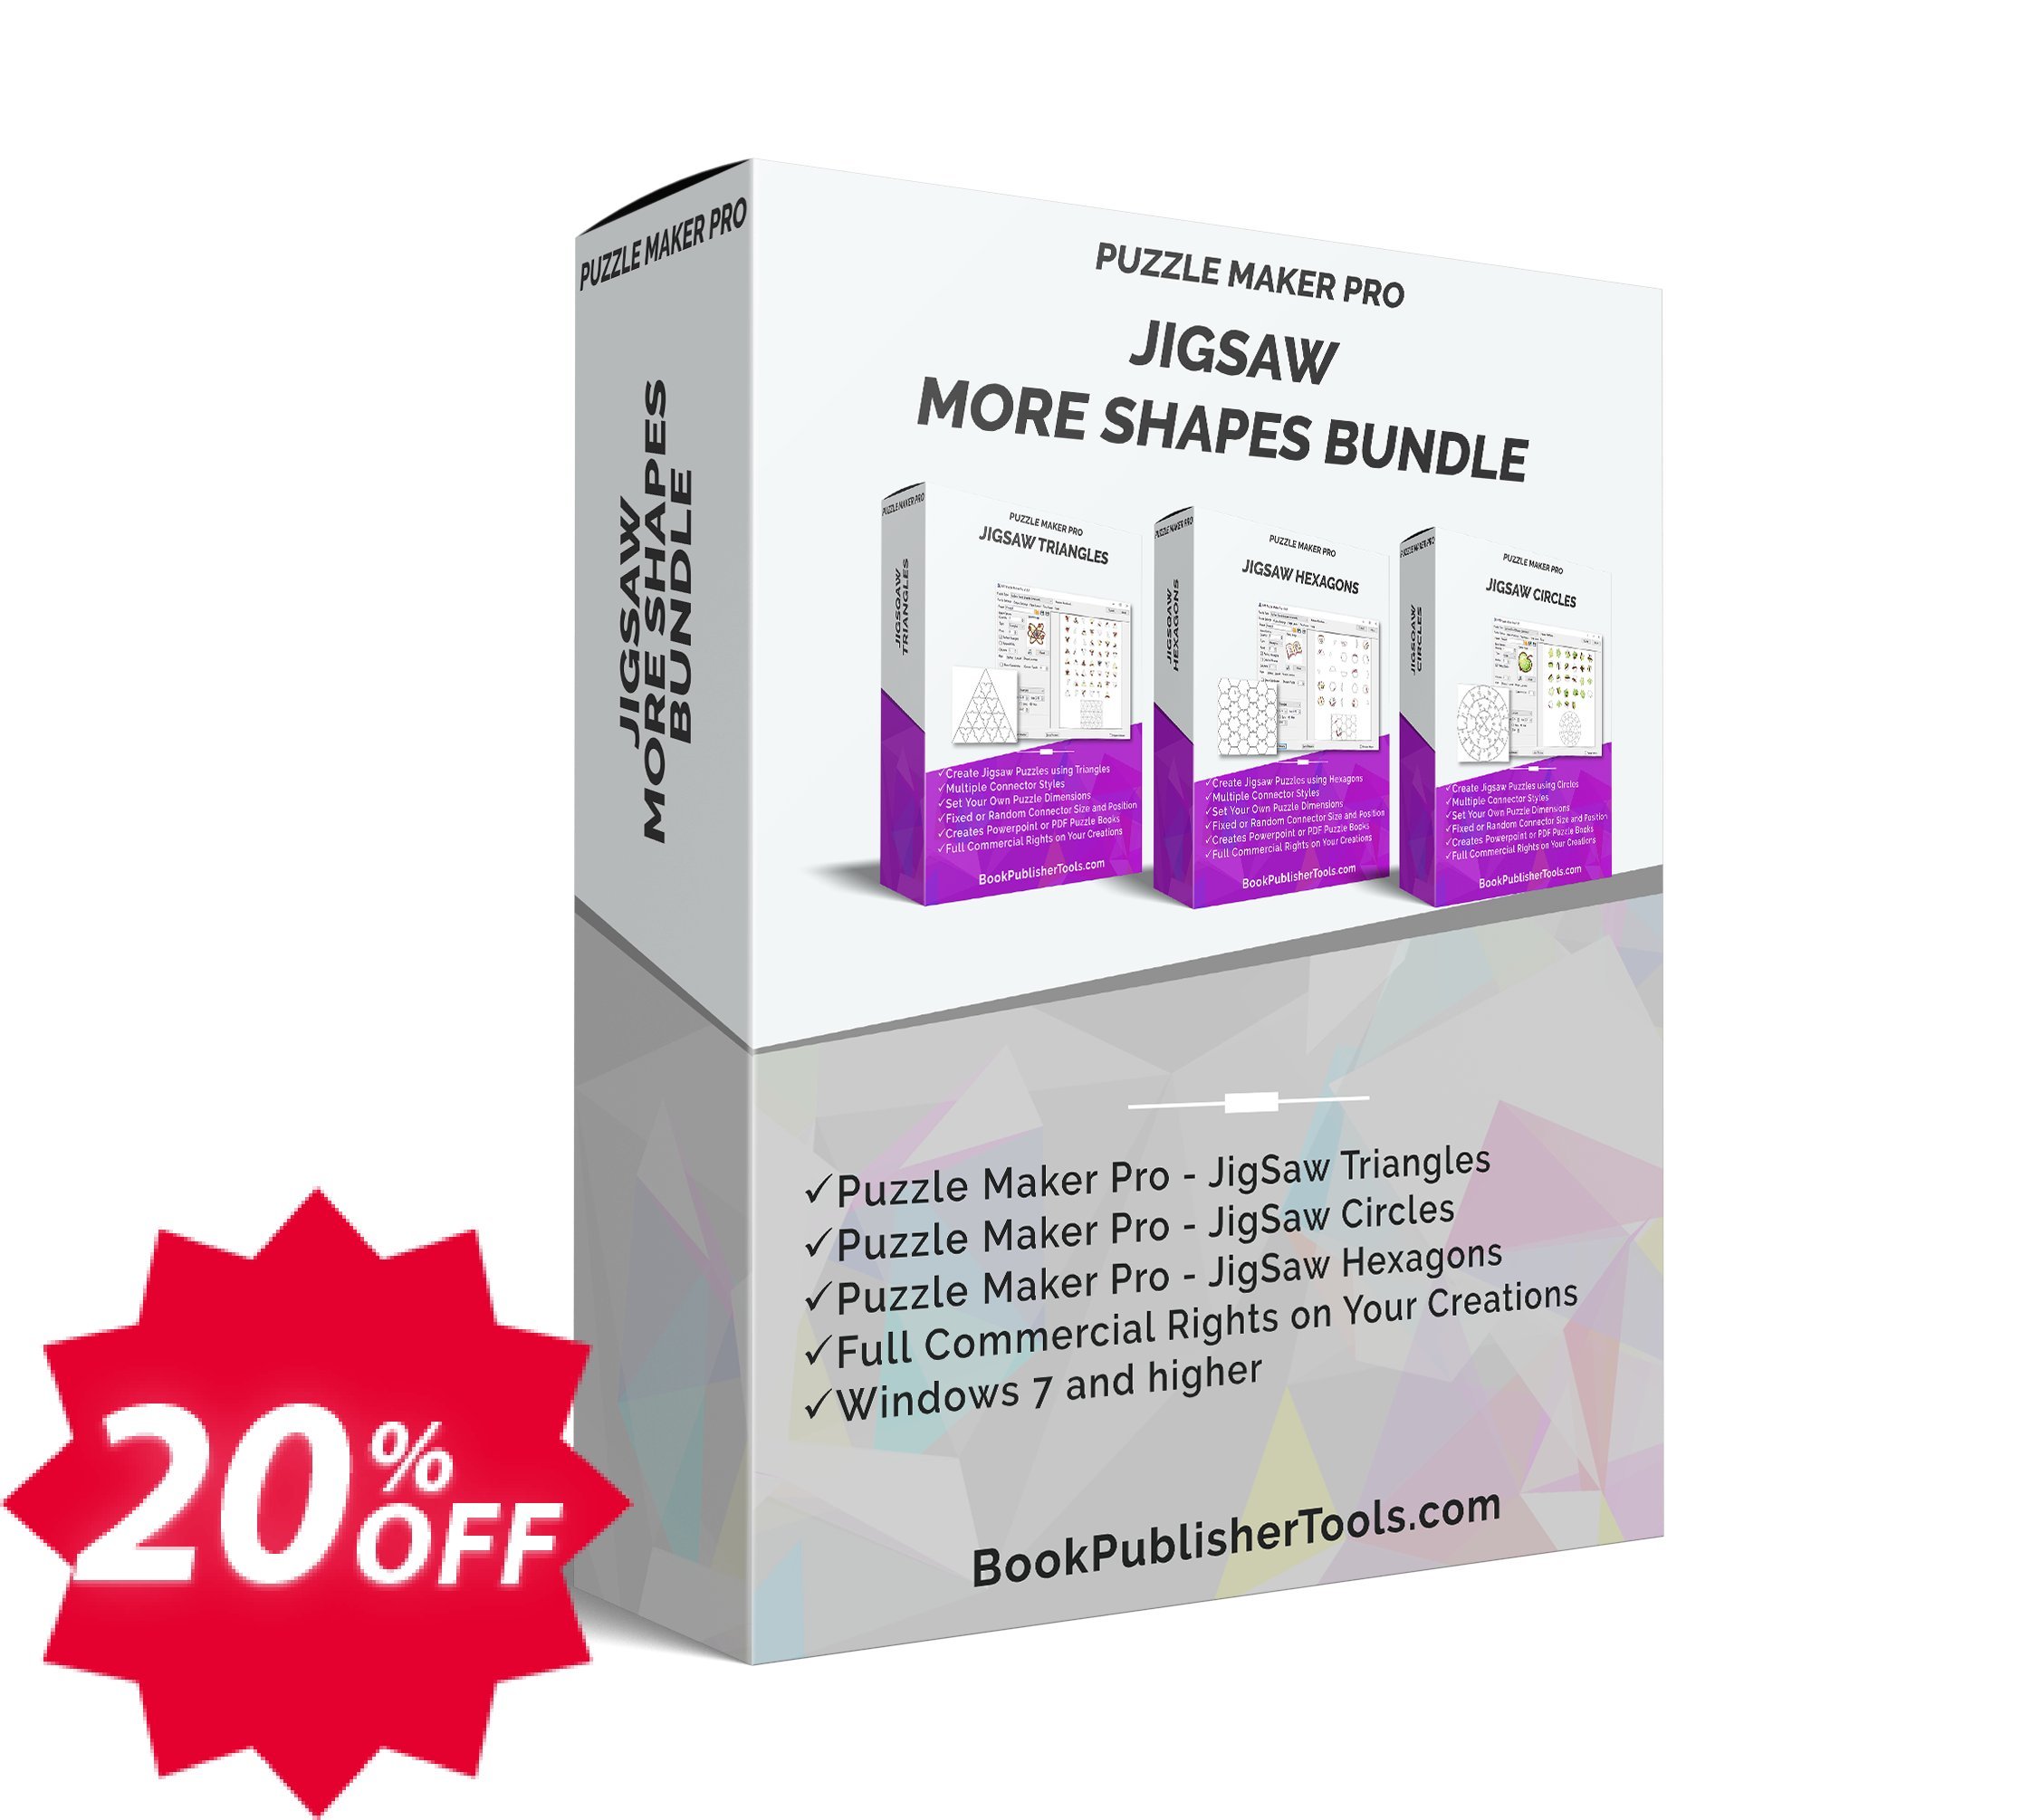 Puzzle Maker Pro - JigSaw More Shapes Bundle Coupon code 20% discount 